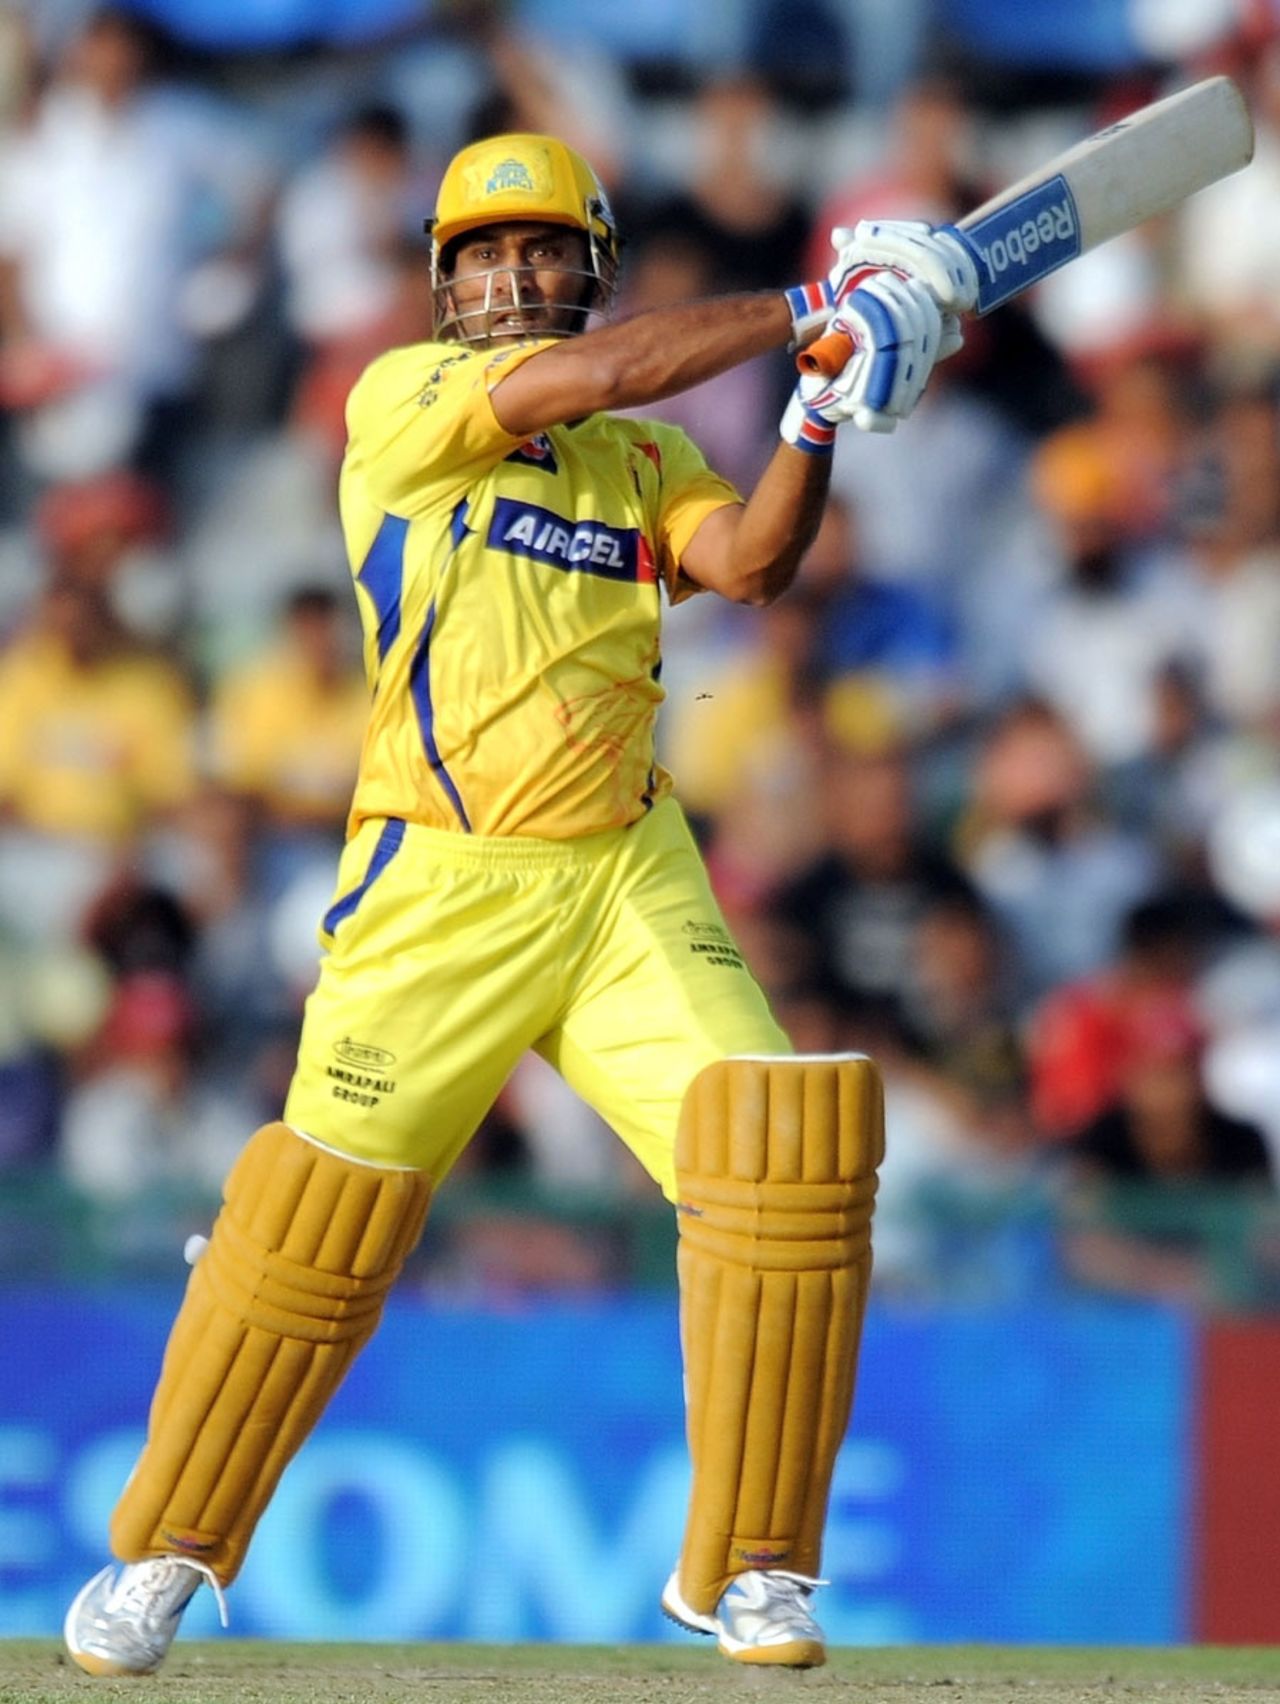 MS Dhoni brought out the big hits in his 20-ball 43, Kings XI Punjab v Chennai Super Kings, IPL 2011, Mohali, April 13, 2011